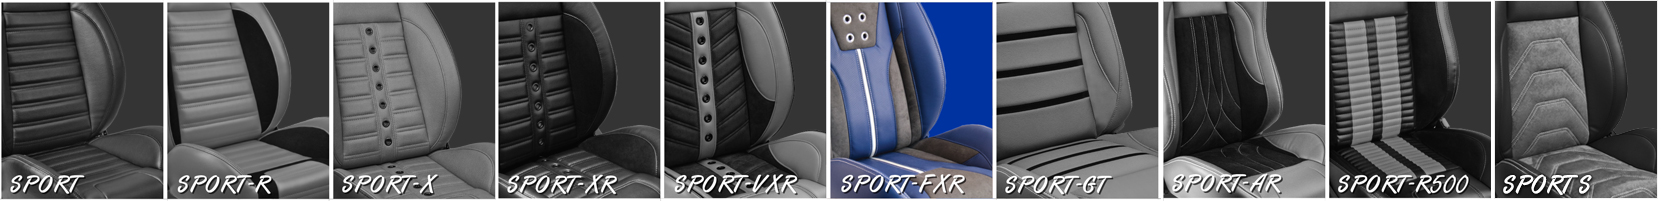 Sport FXR style